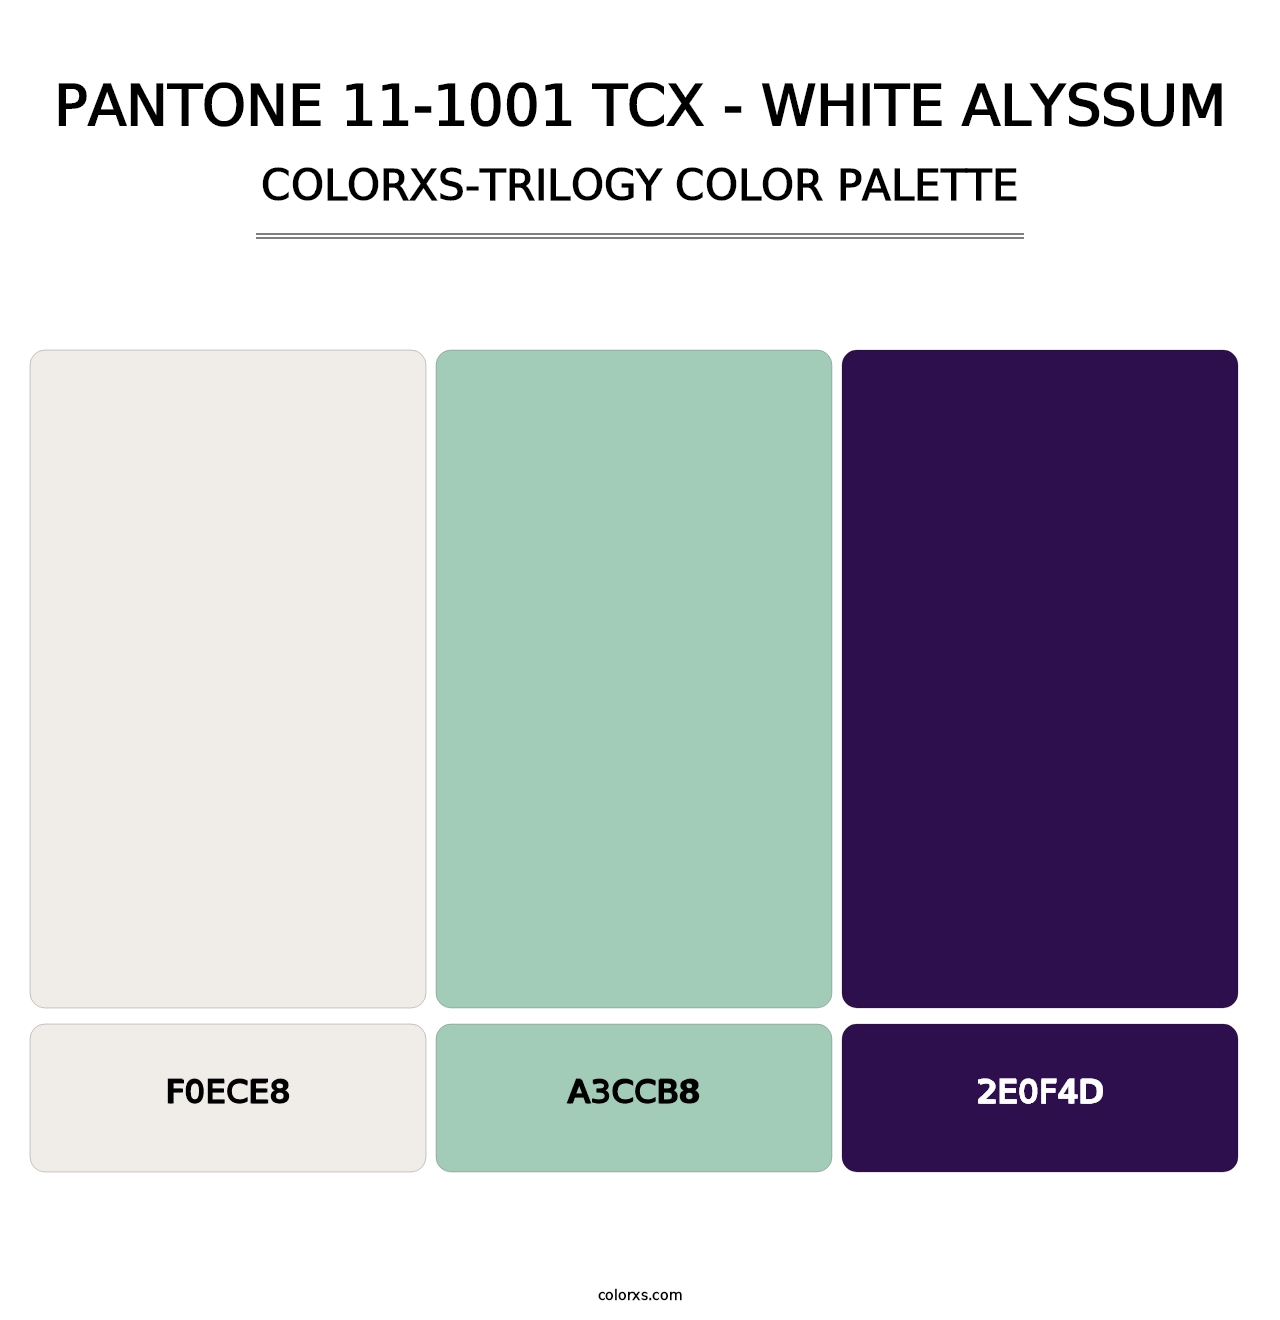 PANTONE 11-1001 TCX - White Alyssum - Colorxs Trilogy Palette